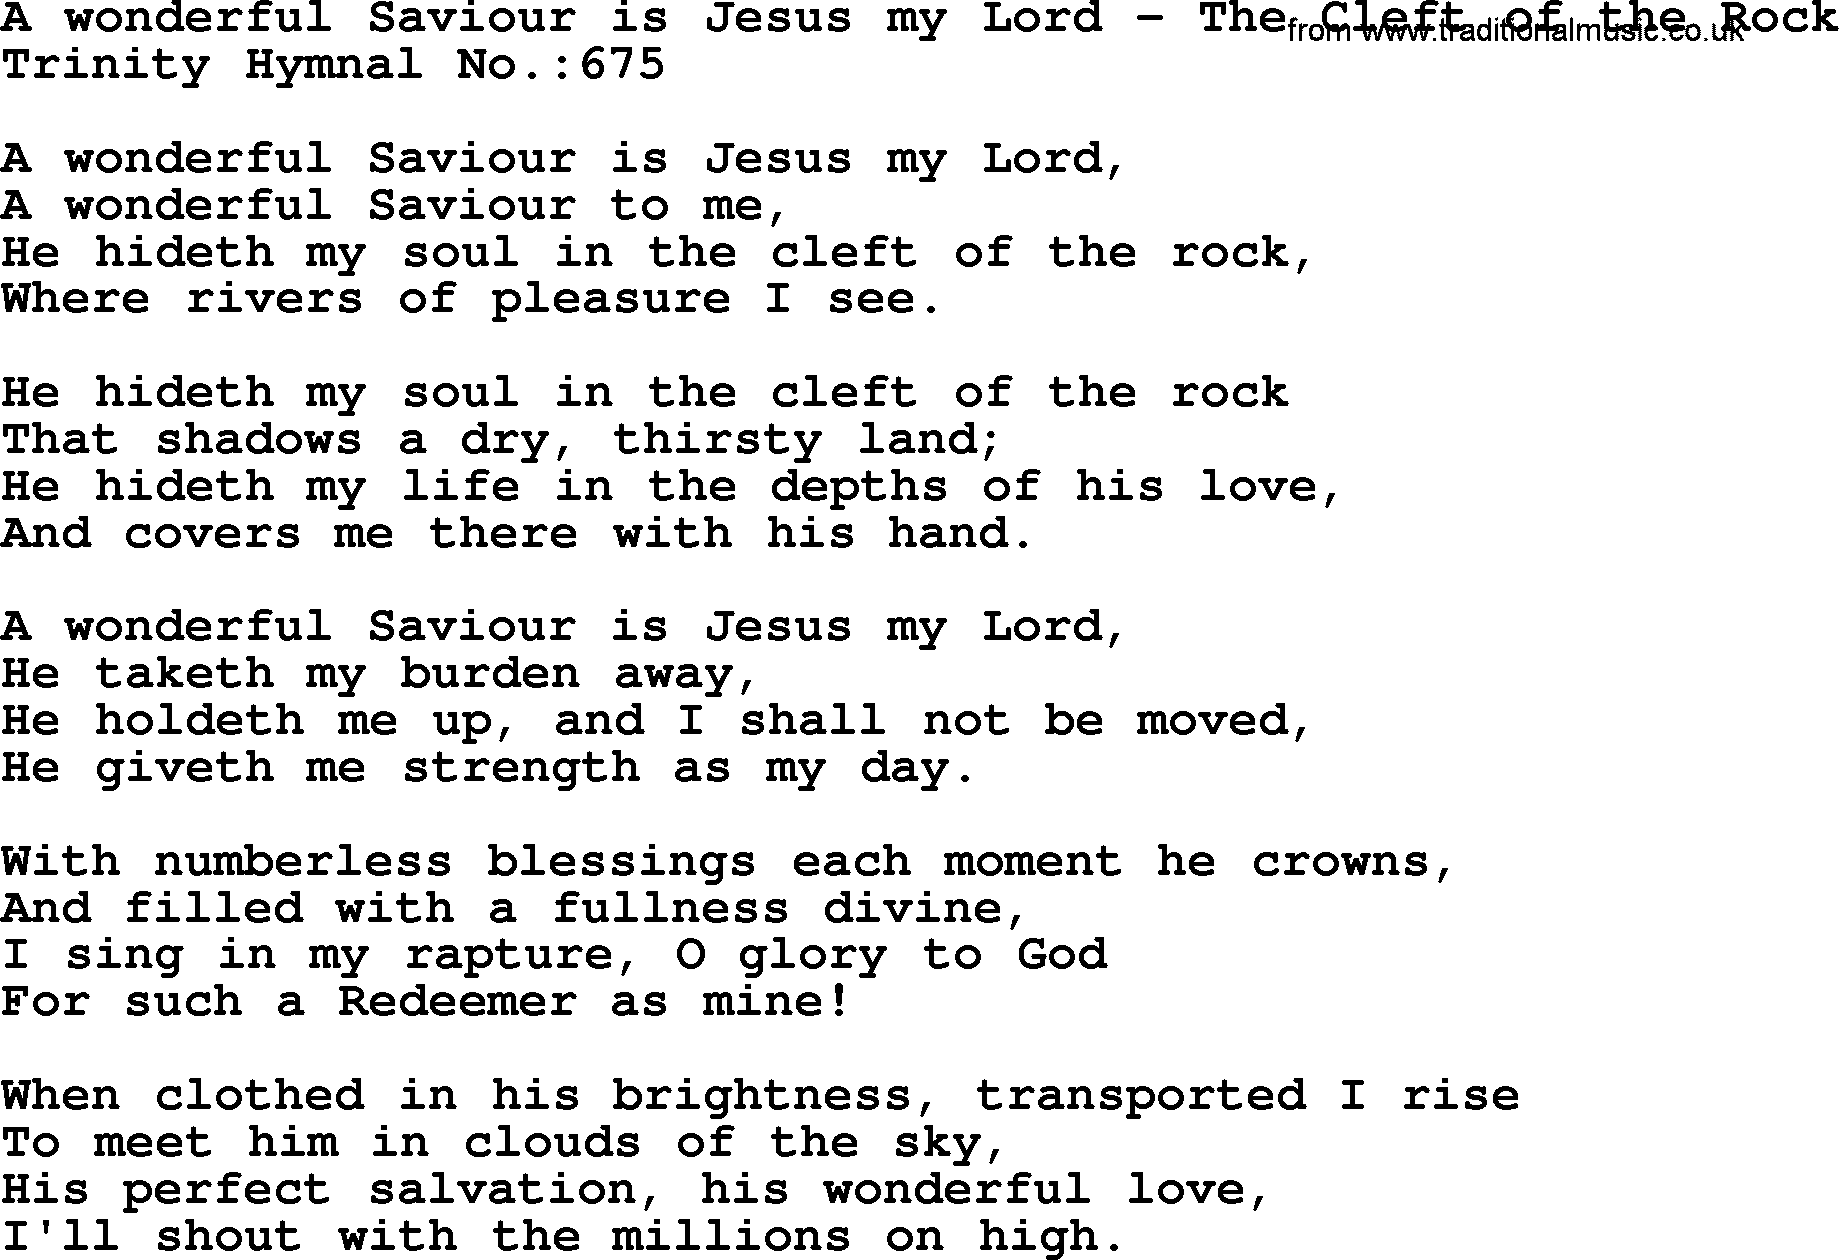 Trinity Hymnal Hymn: A Wonderful Saviour Is Jesus My Lord--The Cleft Of The Rock, lyrics with midi music